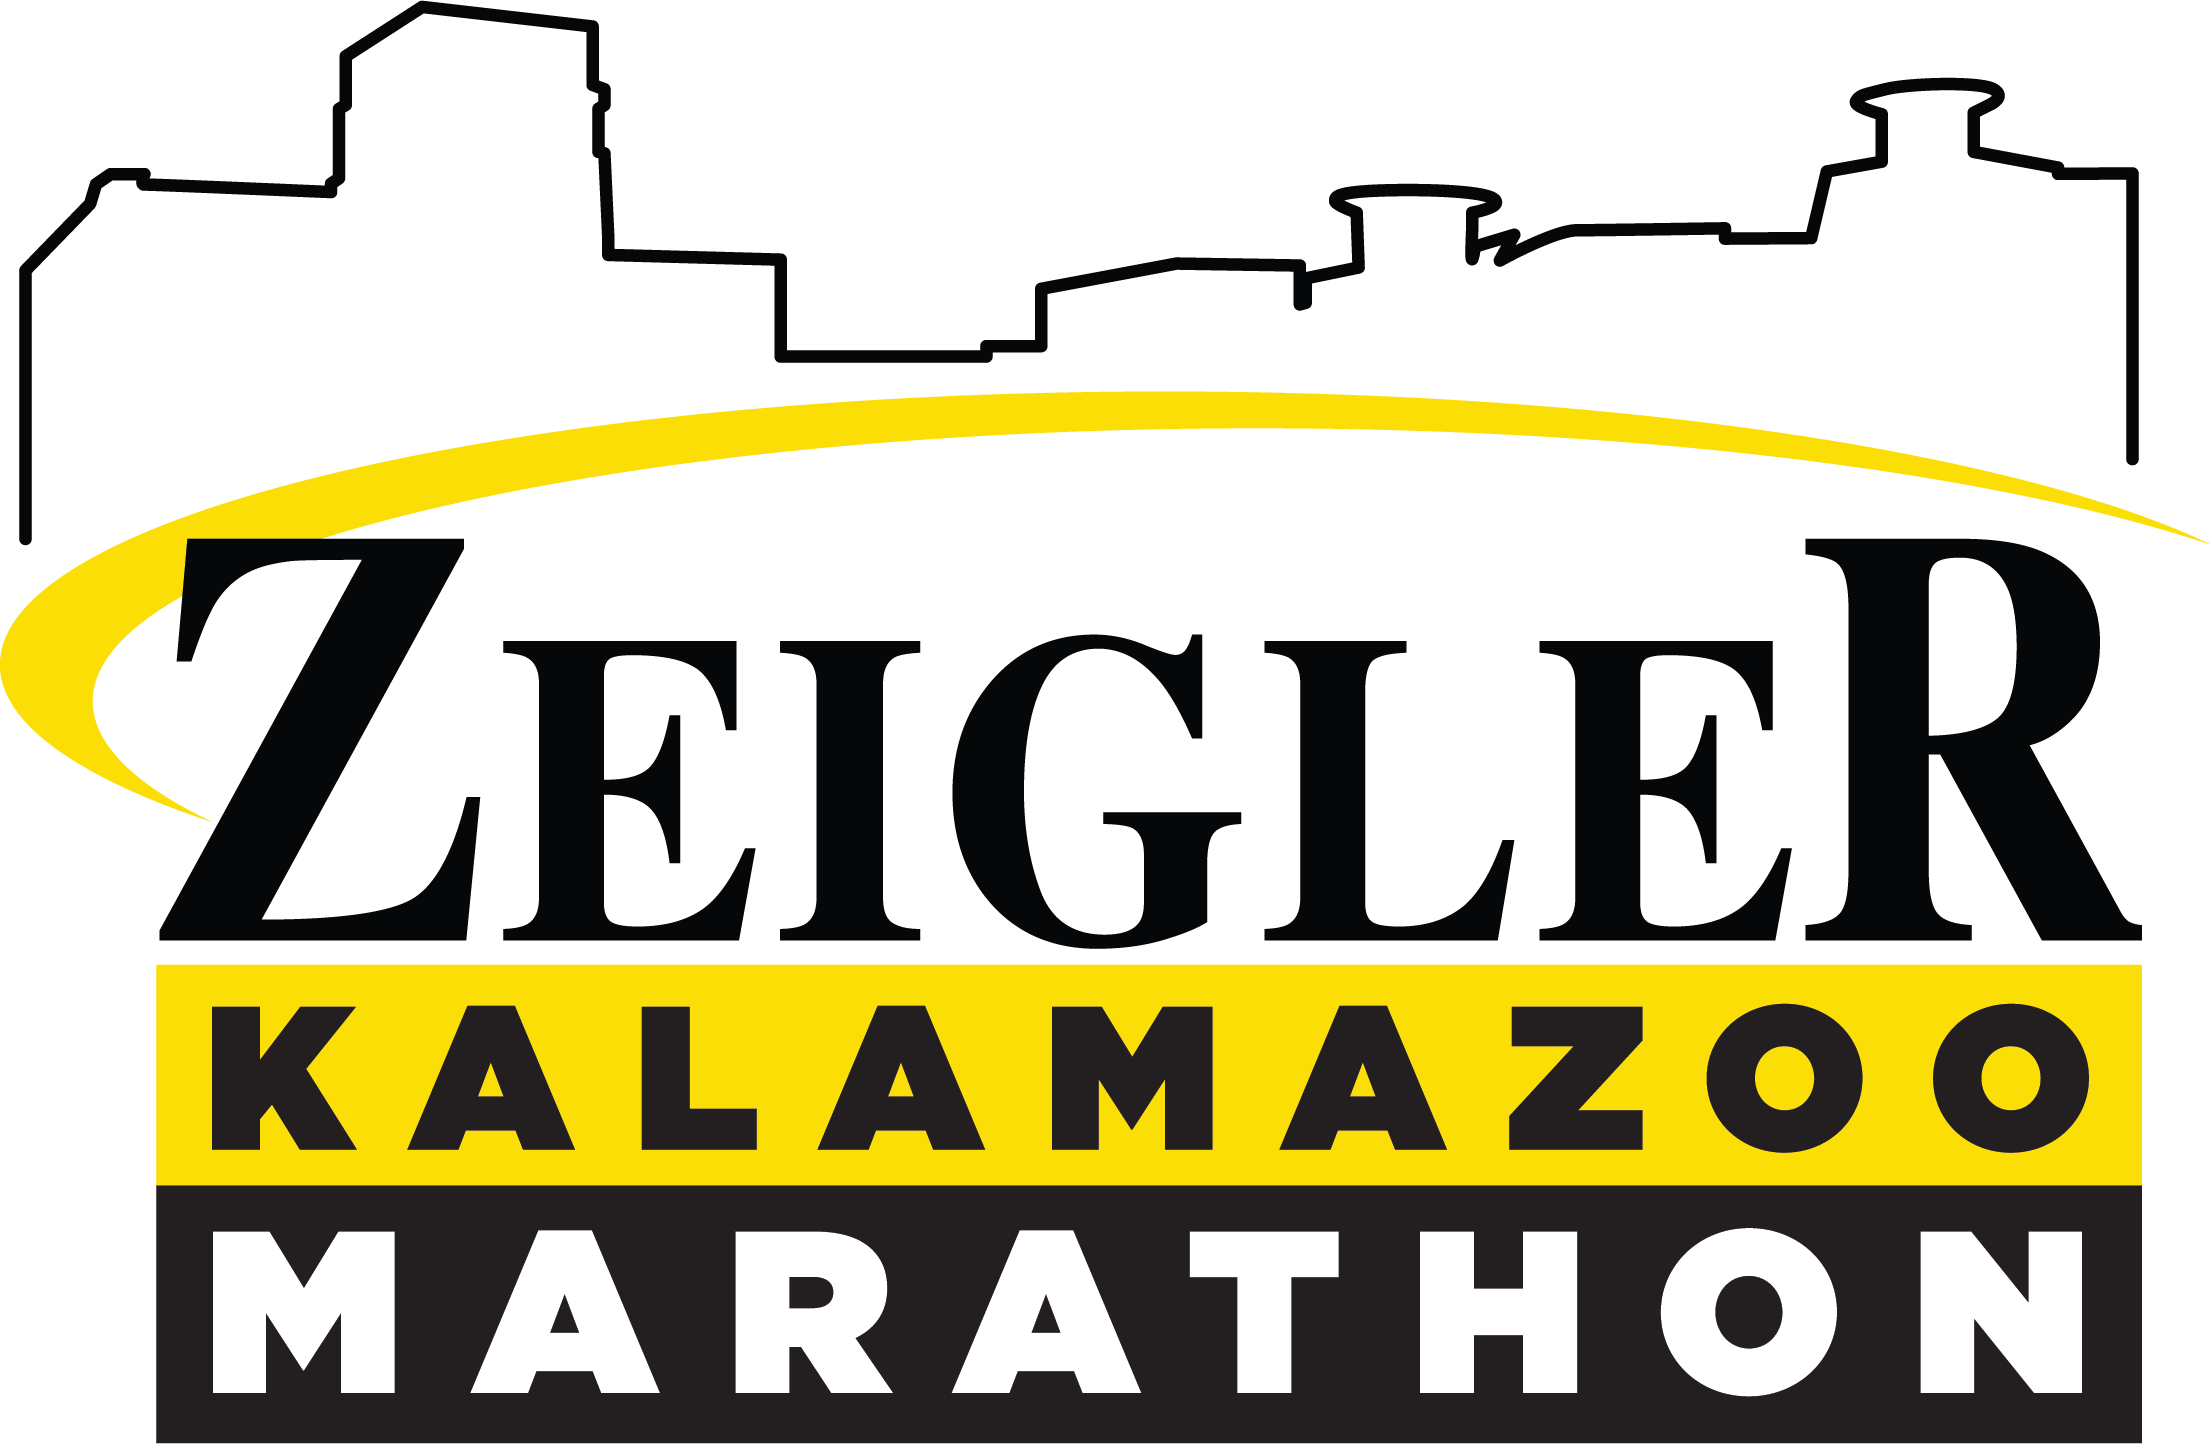 Official Zeigler Kalamazoo Marathon Logo 2022